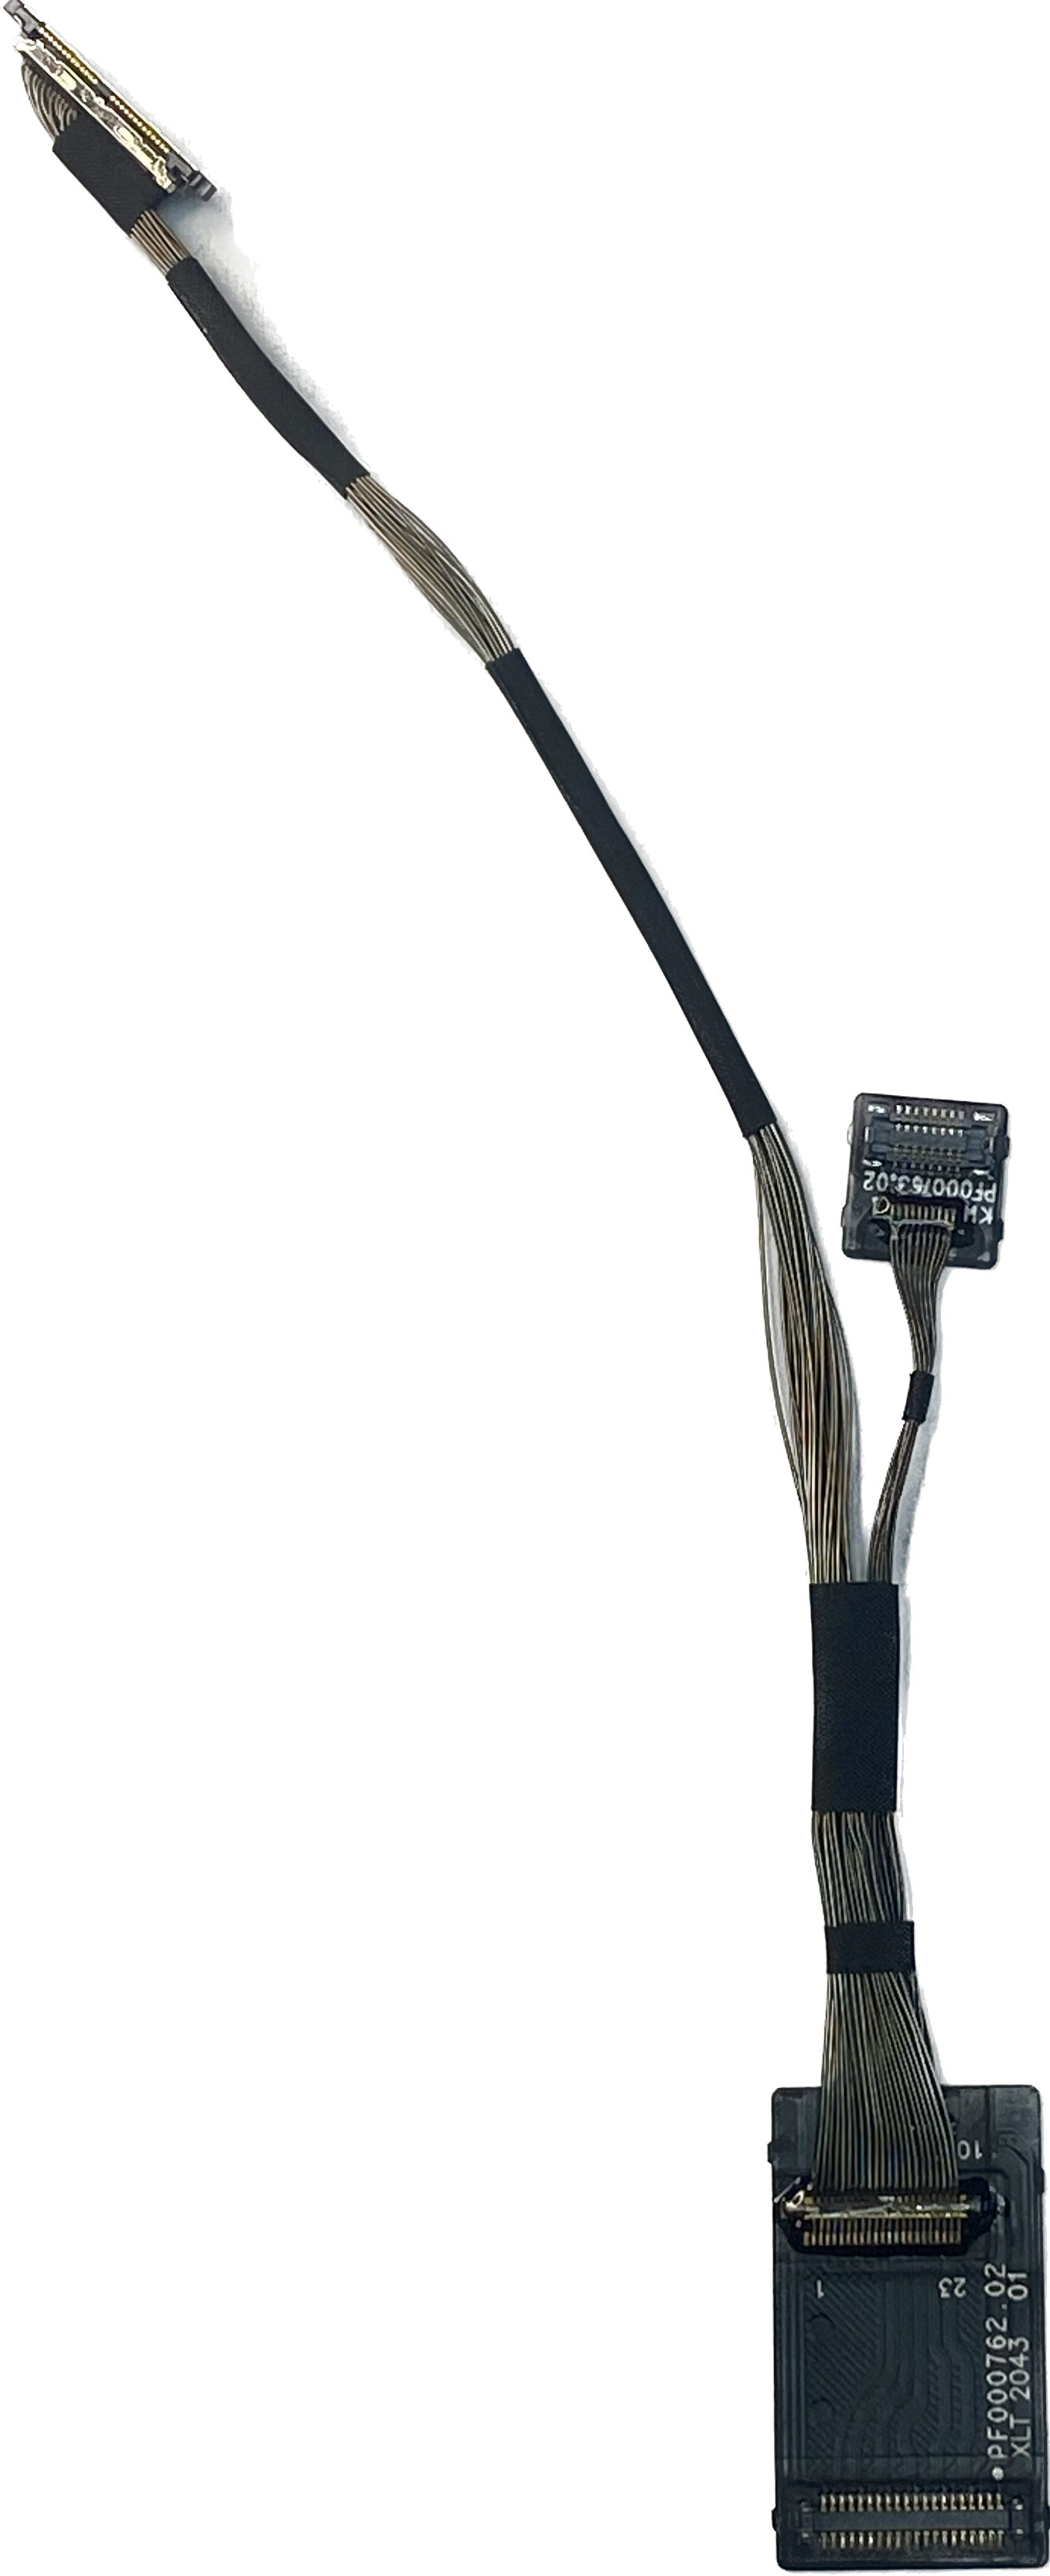 DJI FPV Camera Coaxial Cable